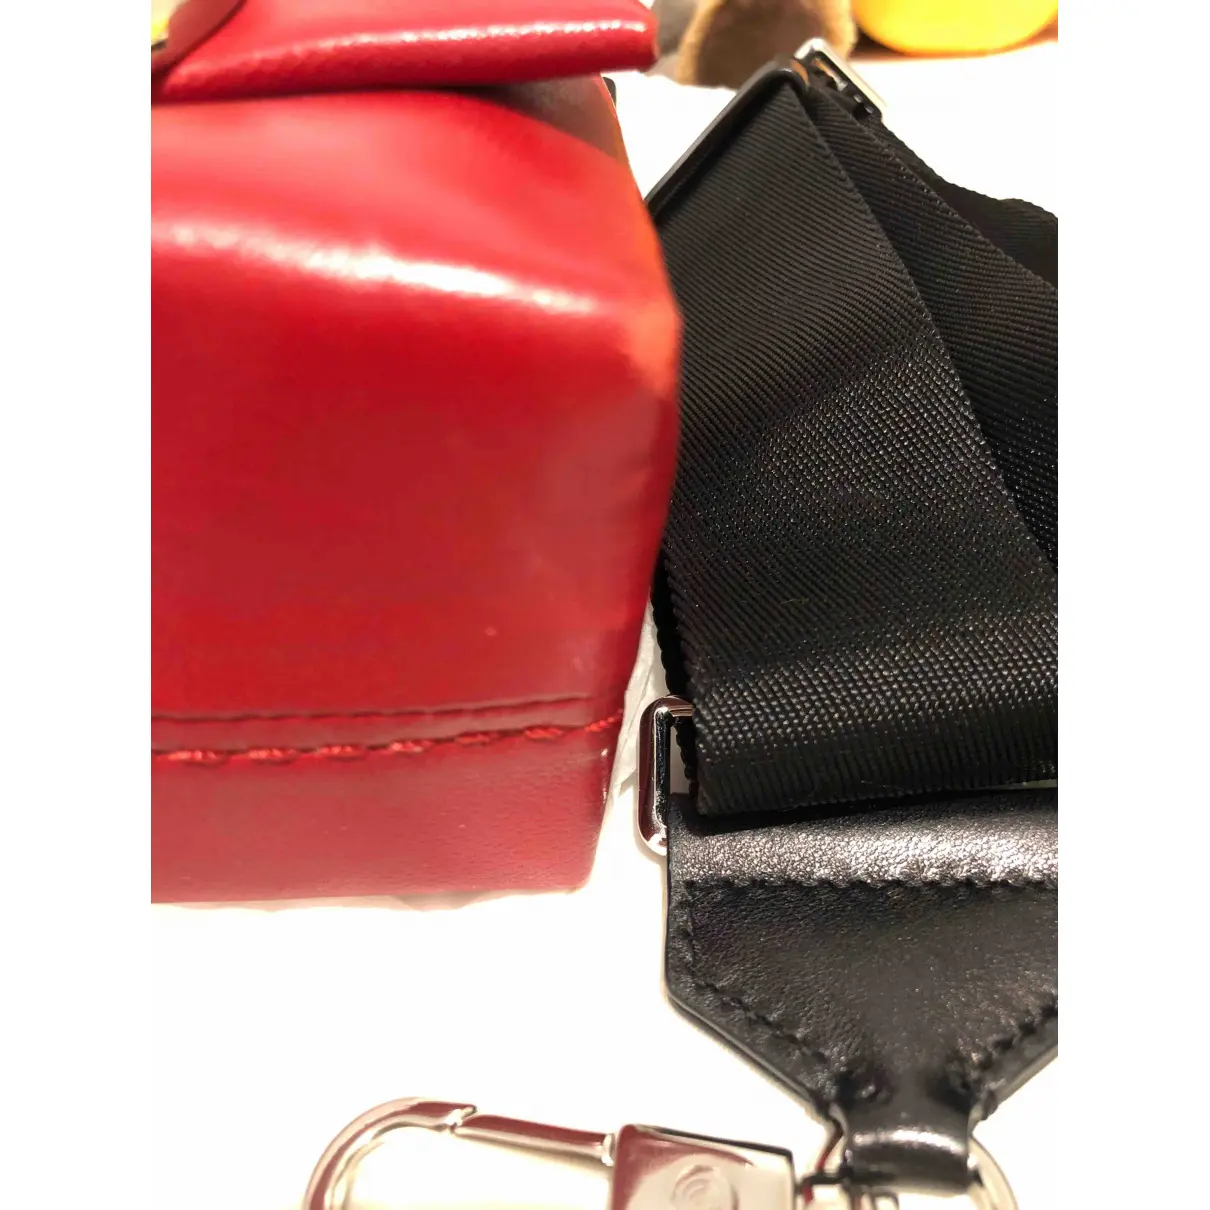 Buy 3.1 Phillip Lim Alix leather crossbody bag online